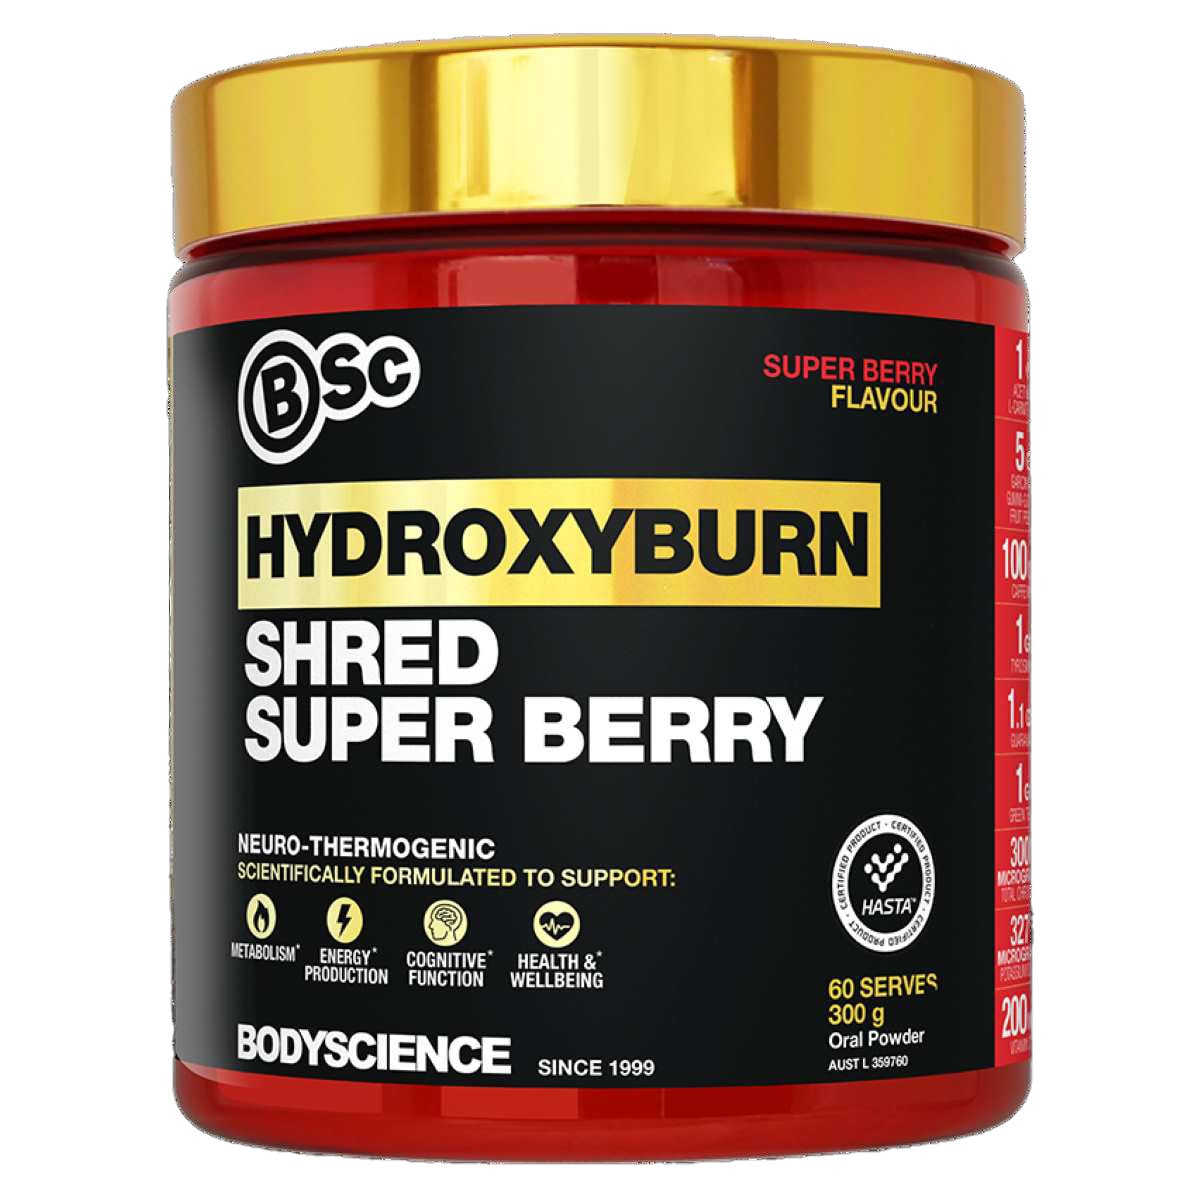 BSc Body Science HydroxyBurn Shred Super Berry 300g Australia